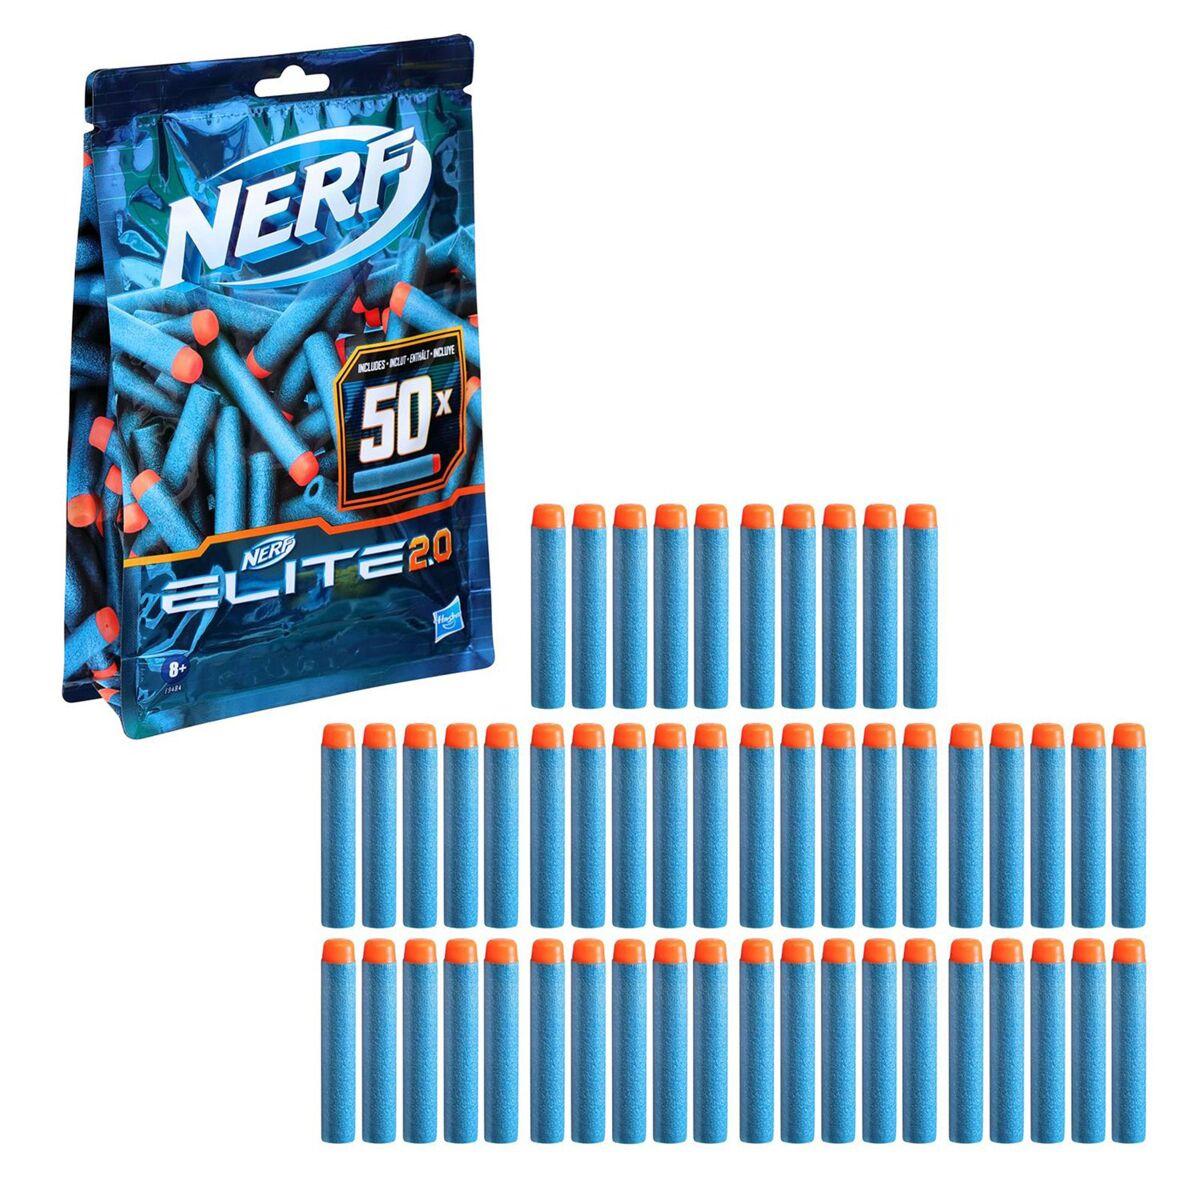 Nerf: Elite 2.0 Набор 50 стрел